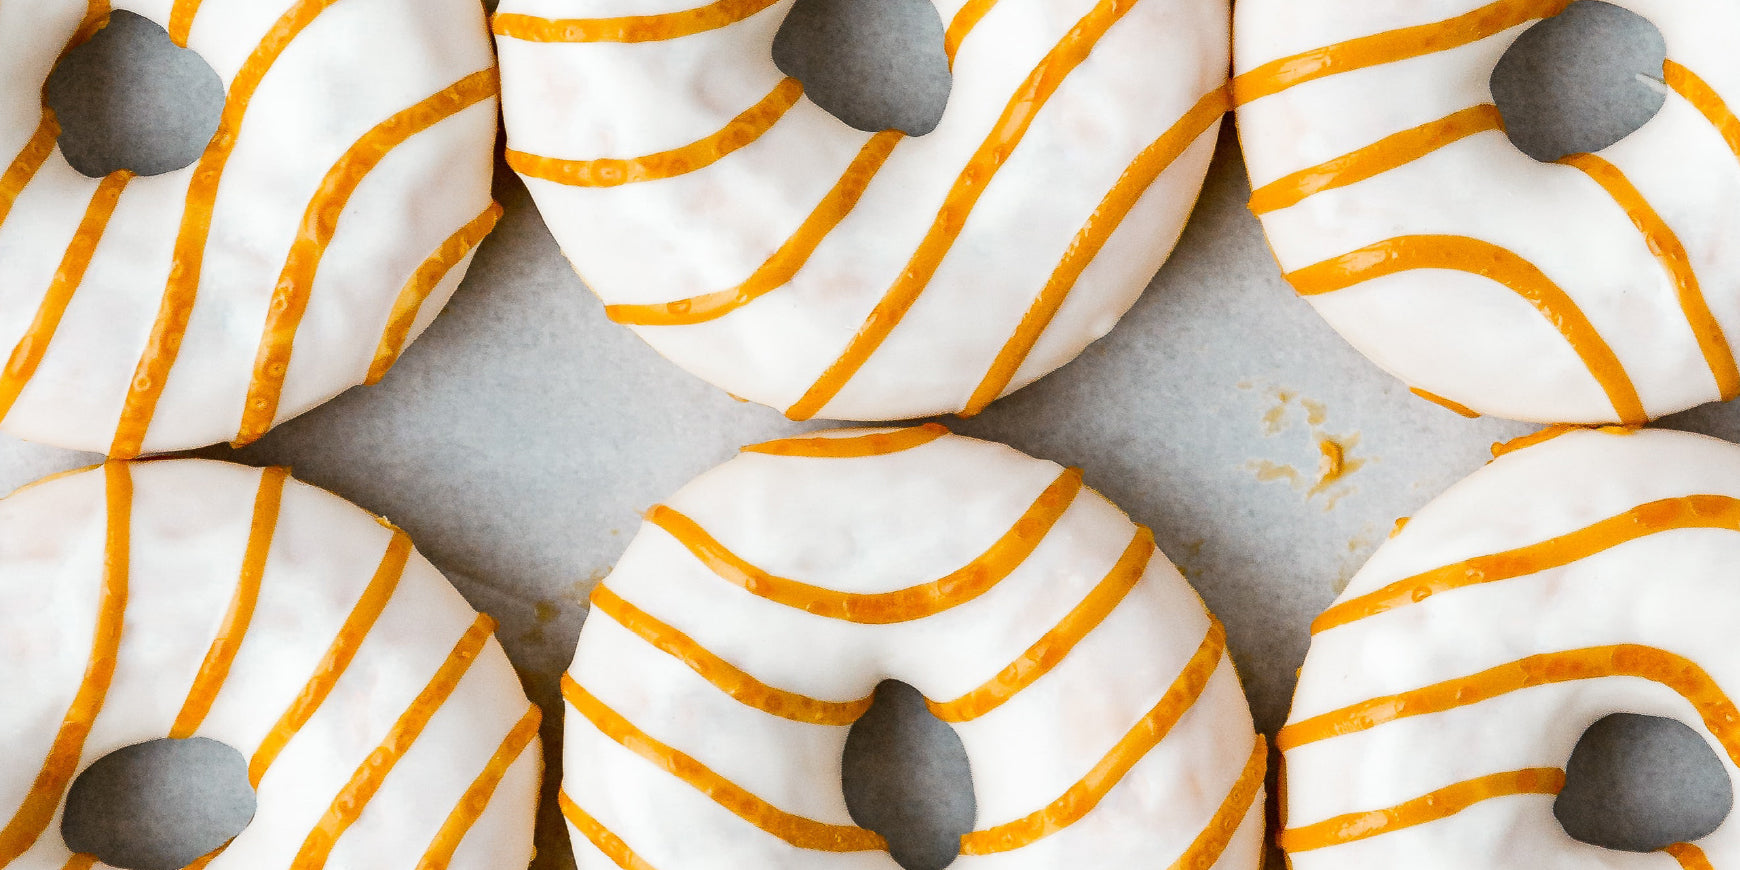 White glazed doughnuts with orange icing